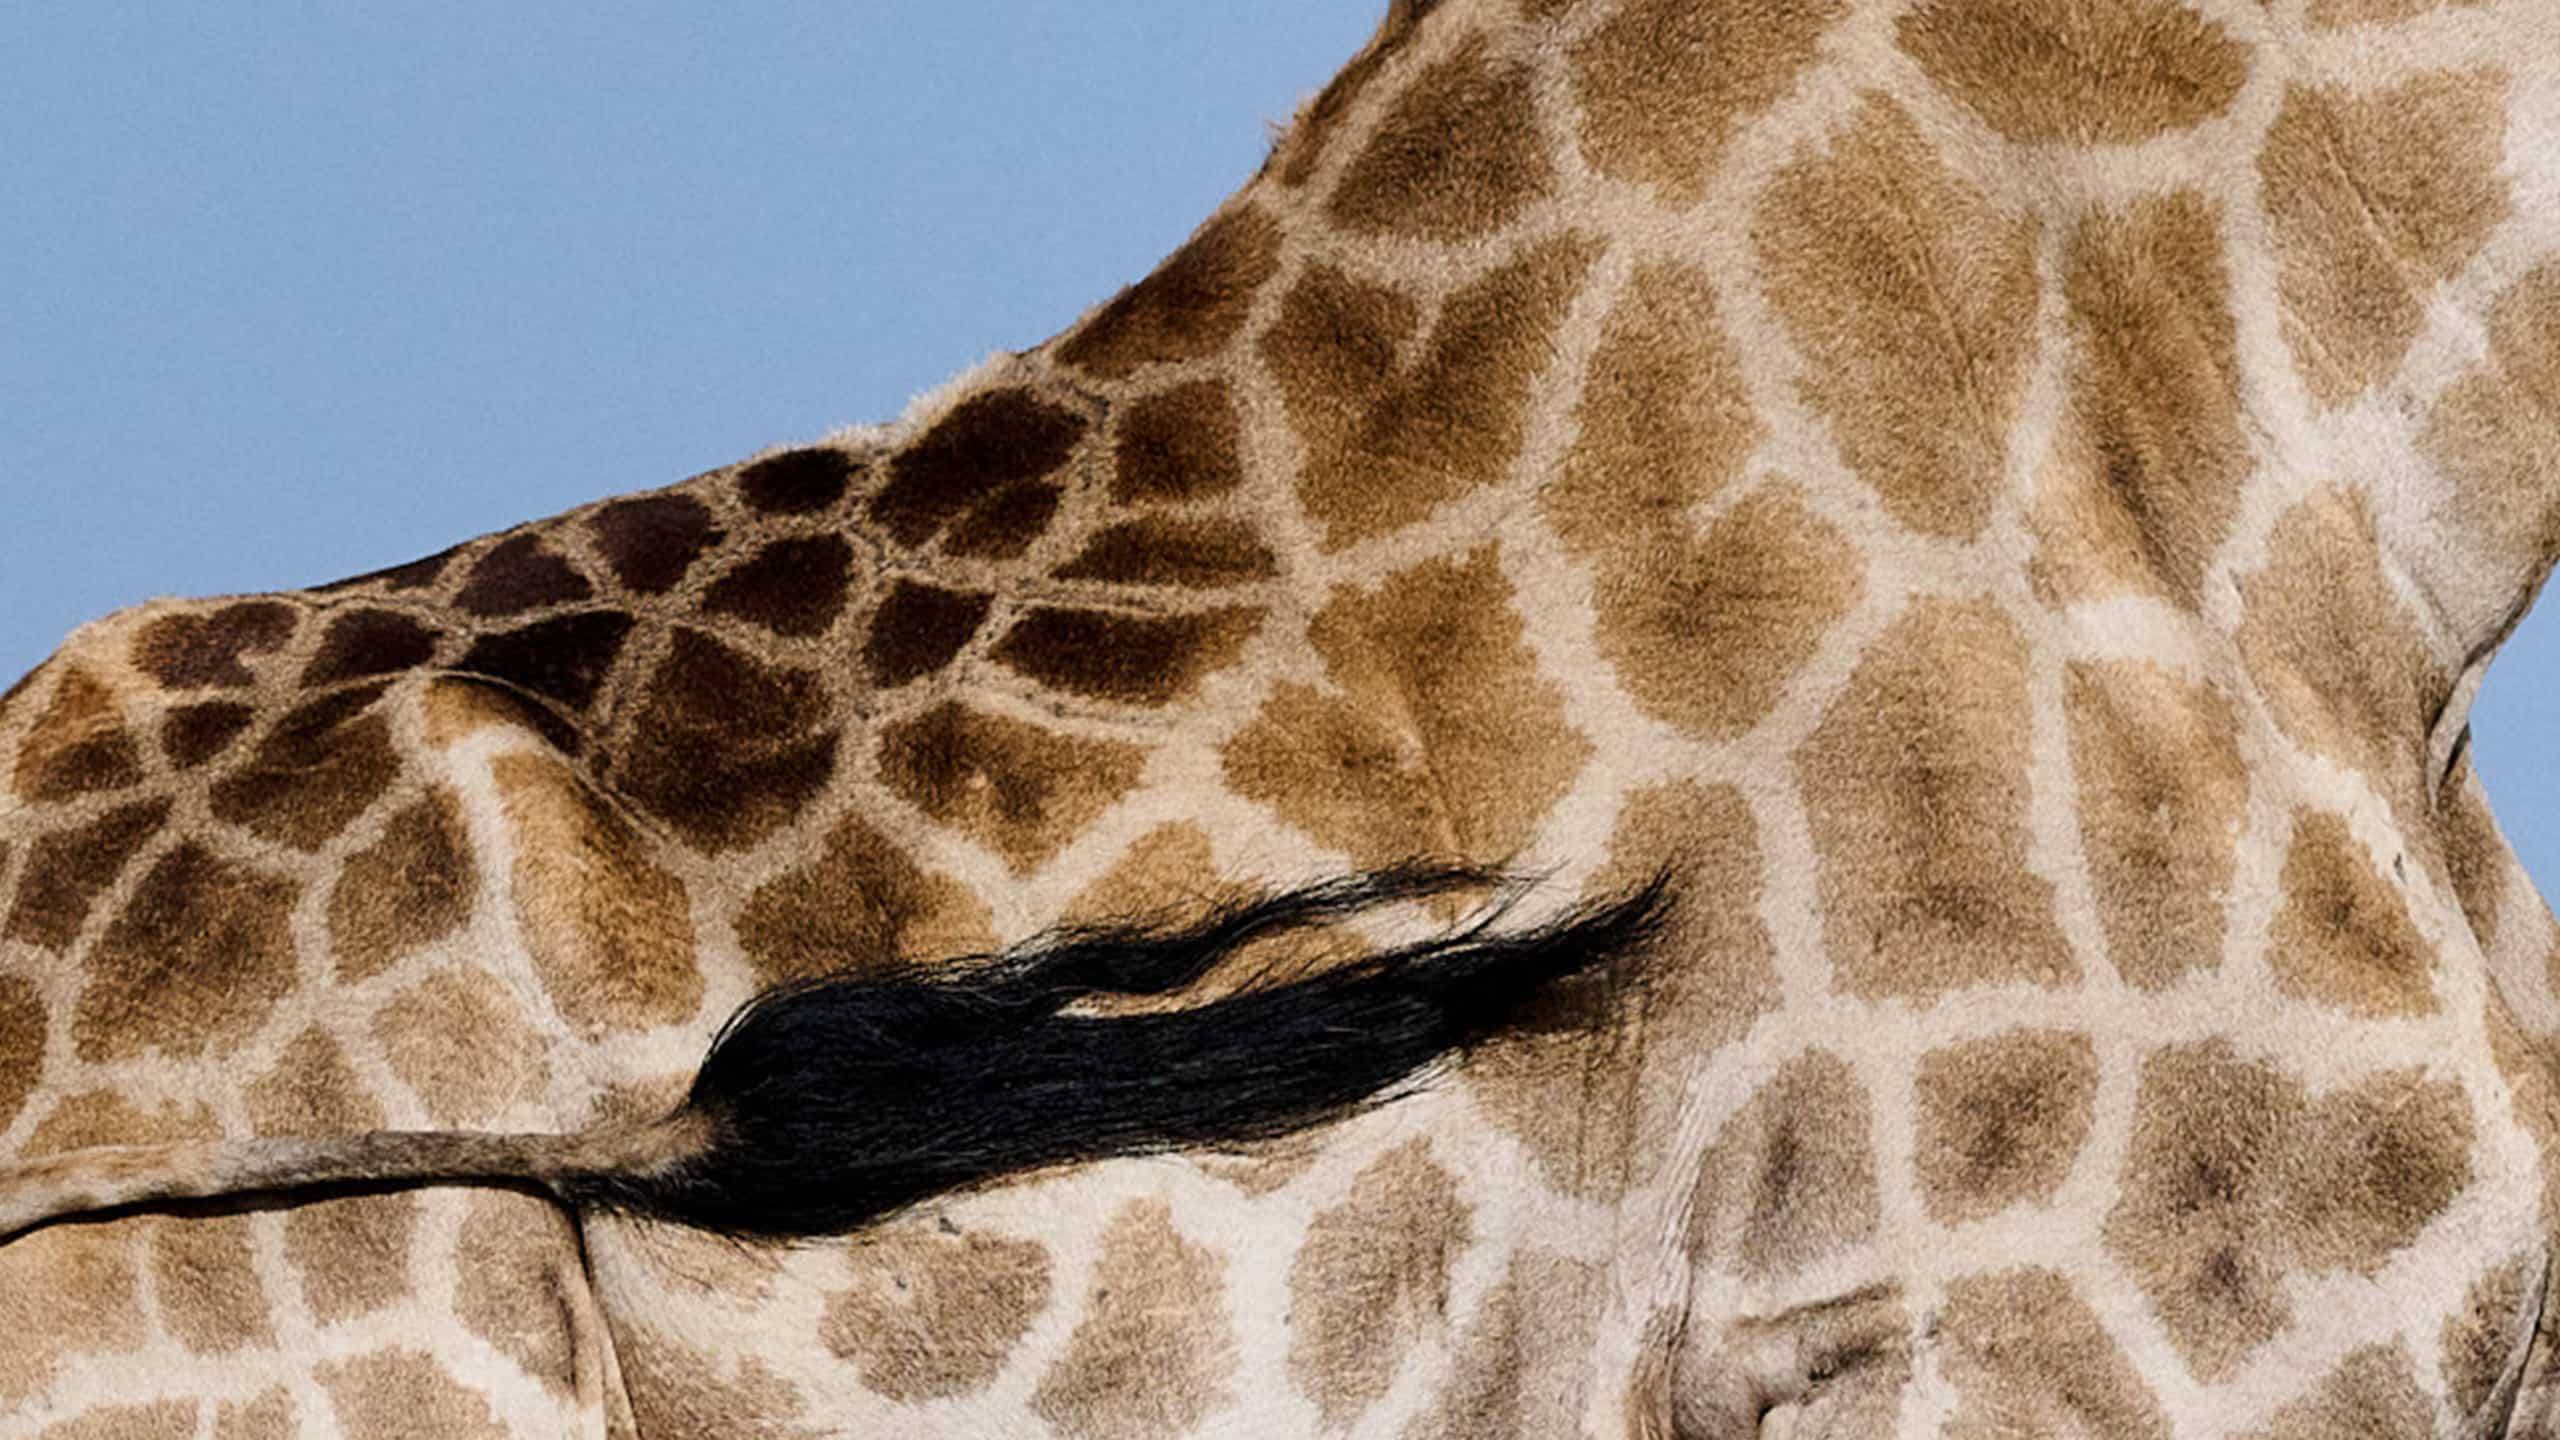 Giraffe Body and Tail